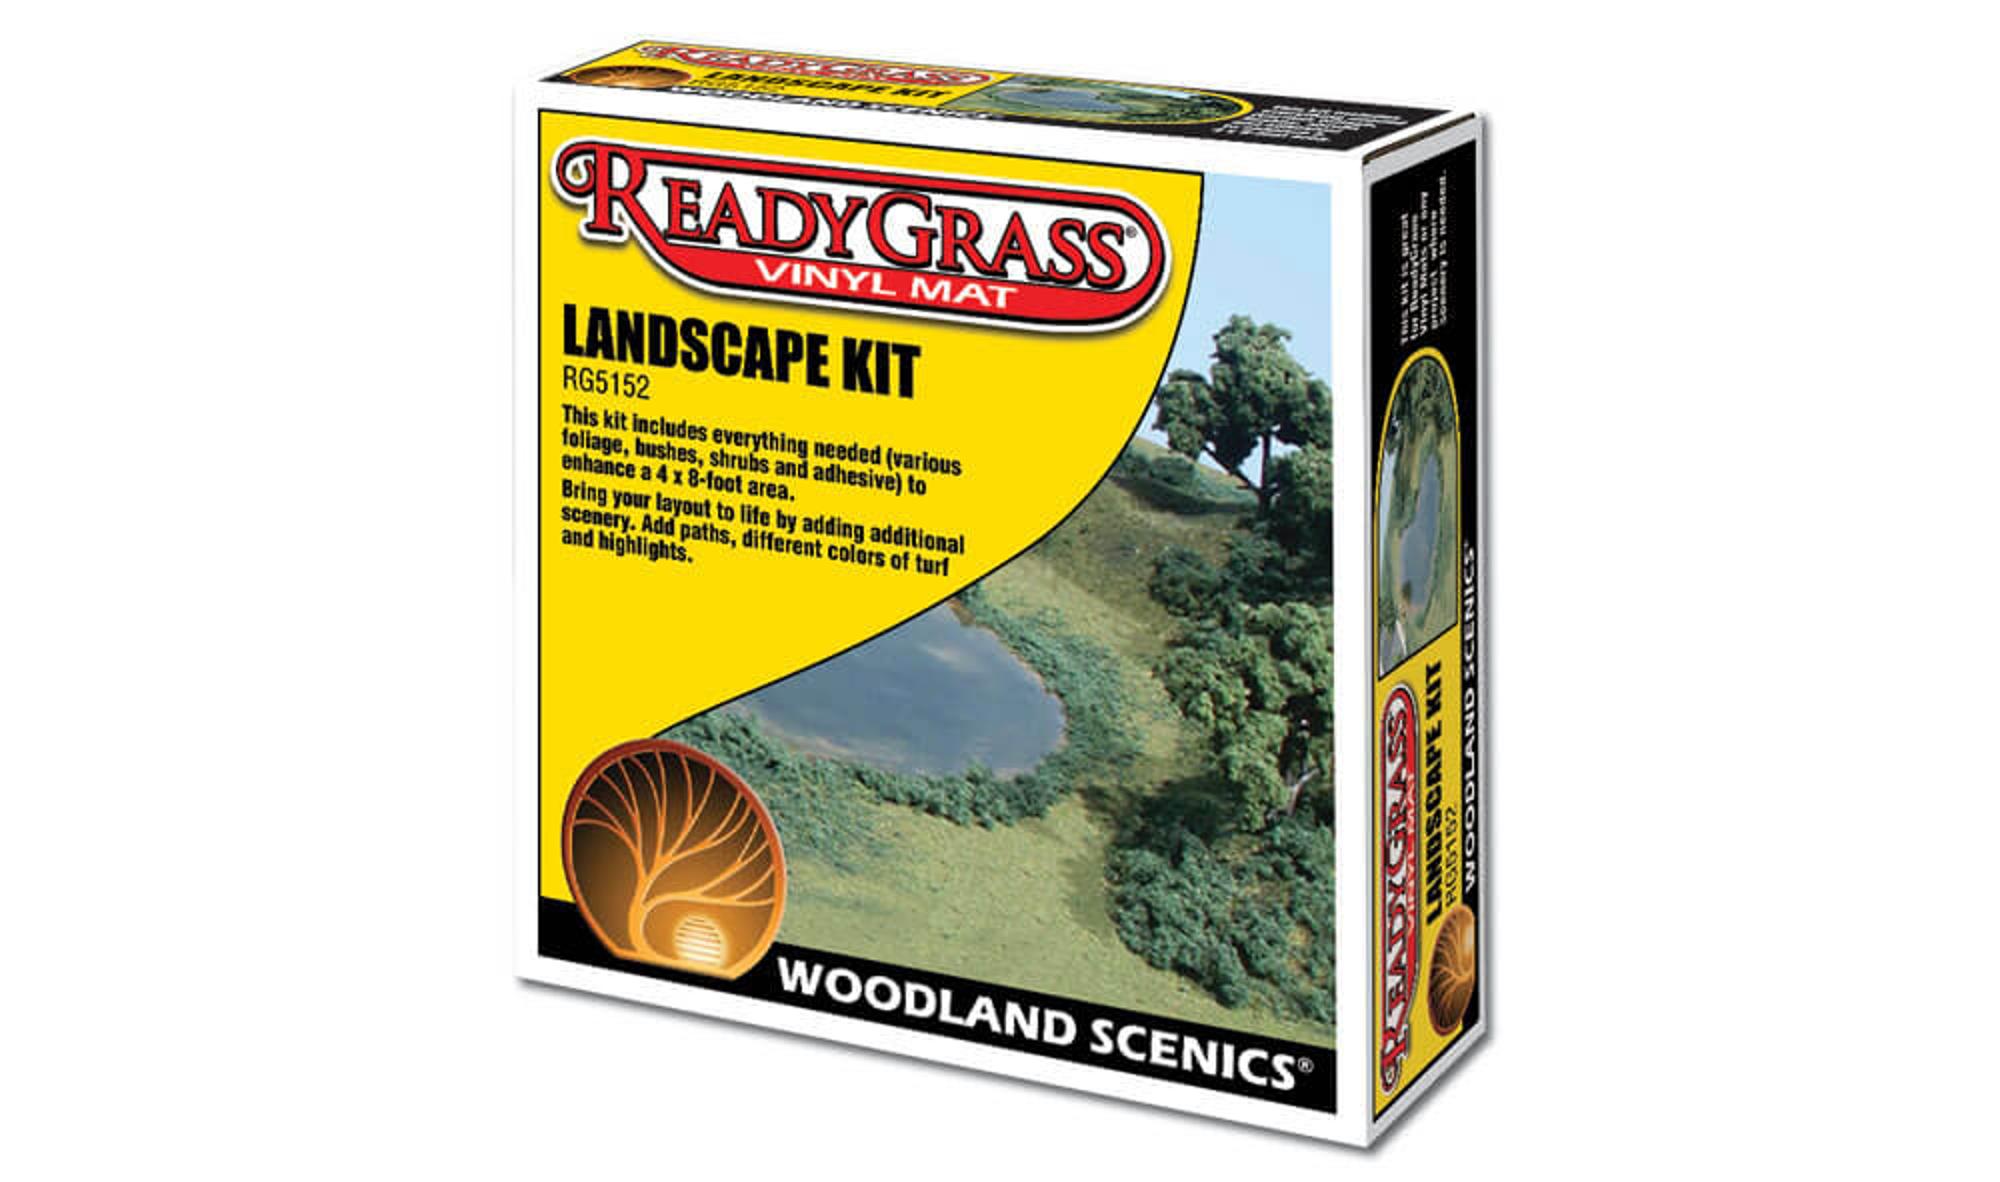 Woodland Scenics ReadyGrass Landscape Kit